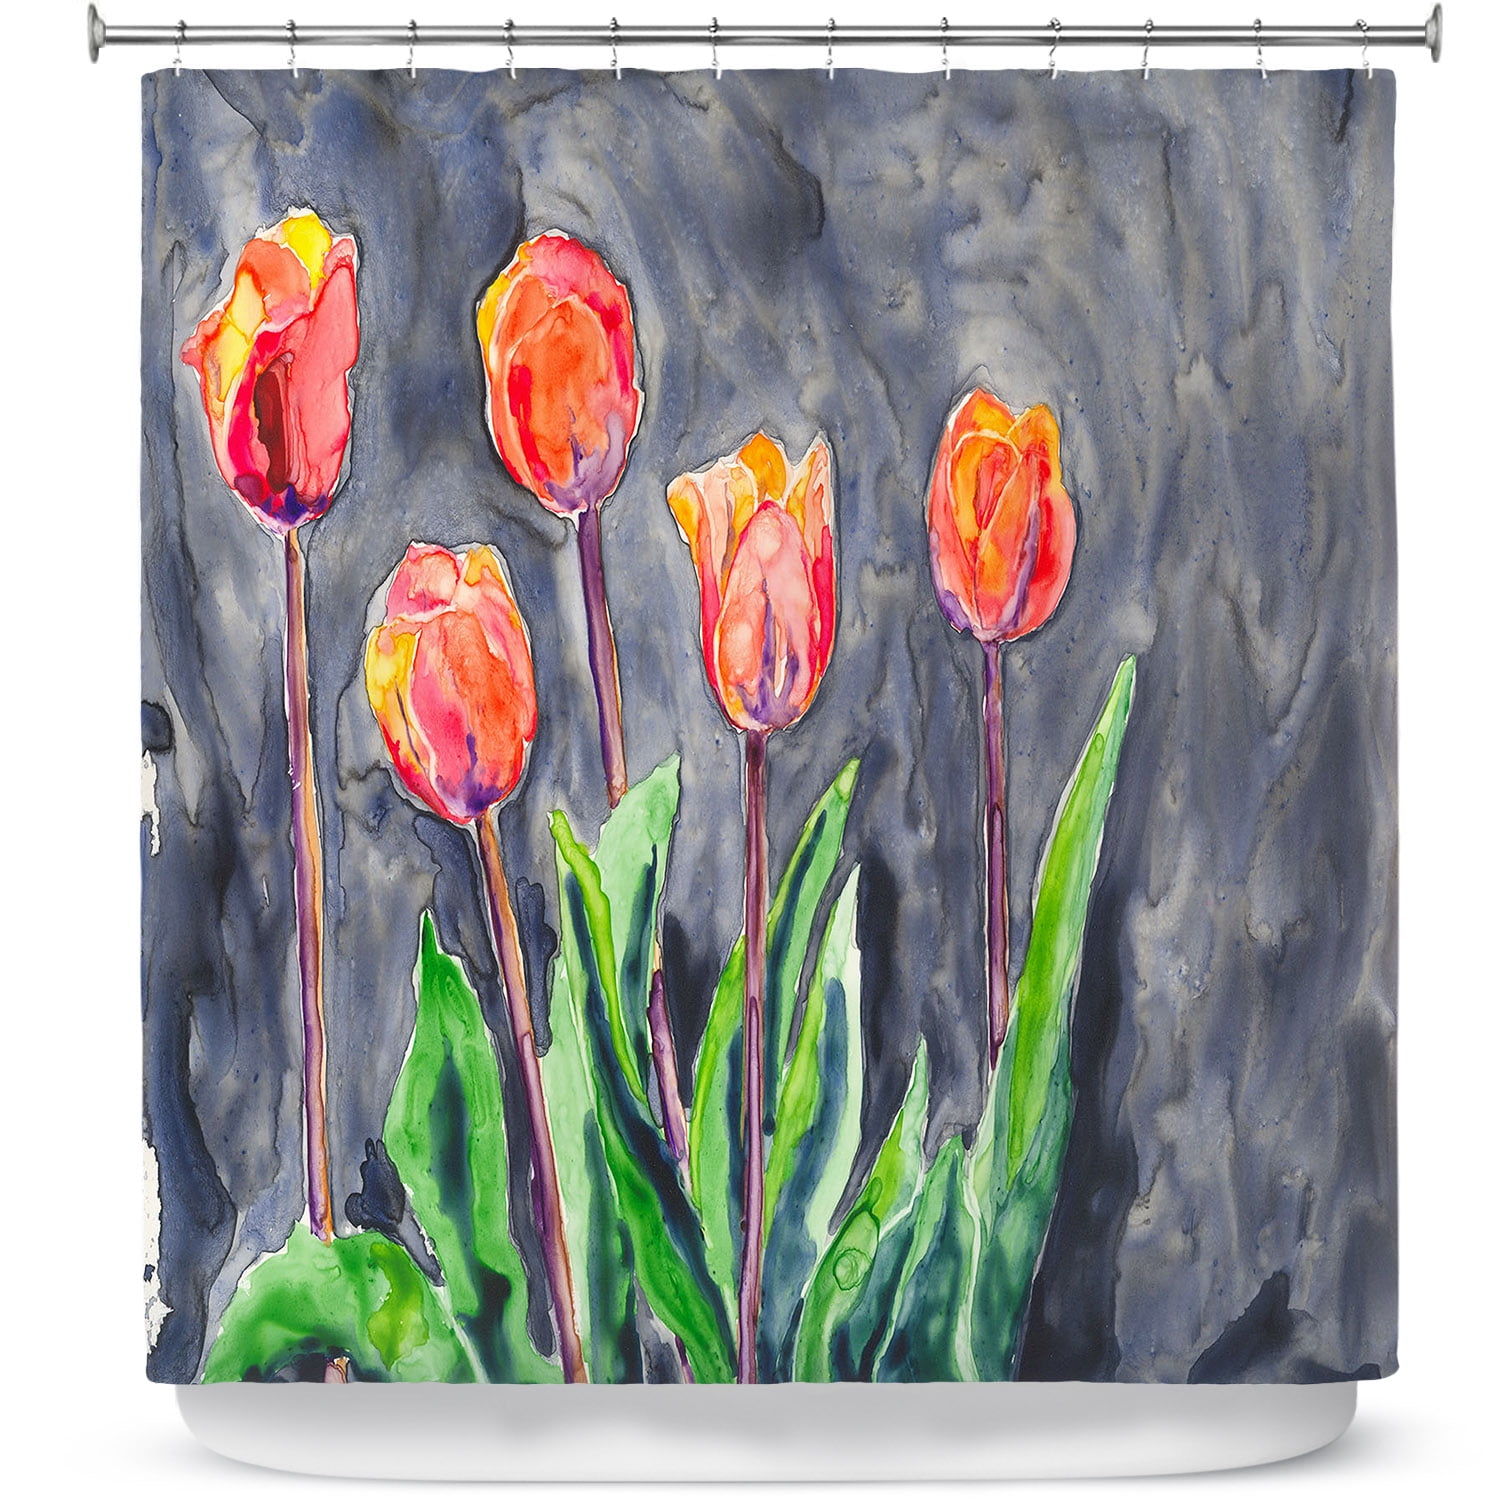 Shower Curtains 70 x 73 from DiaNoche Designs by Brazen Design Studio -  Tulips